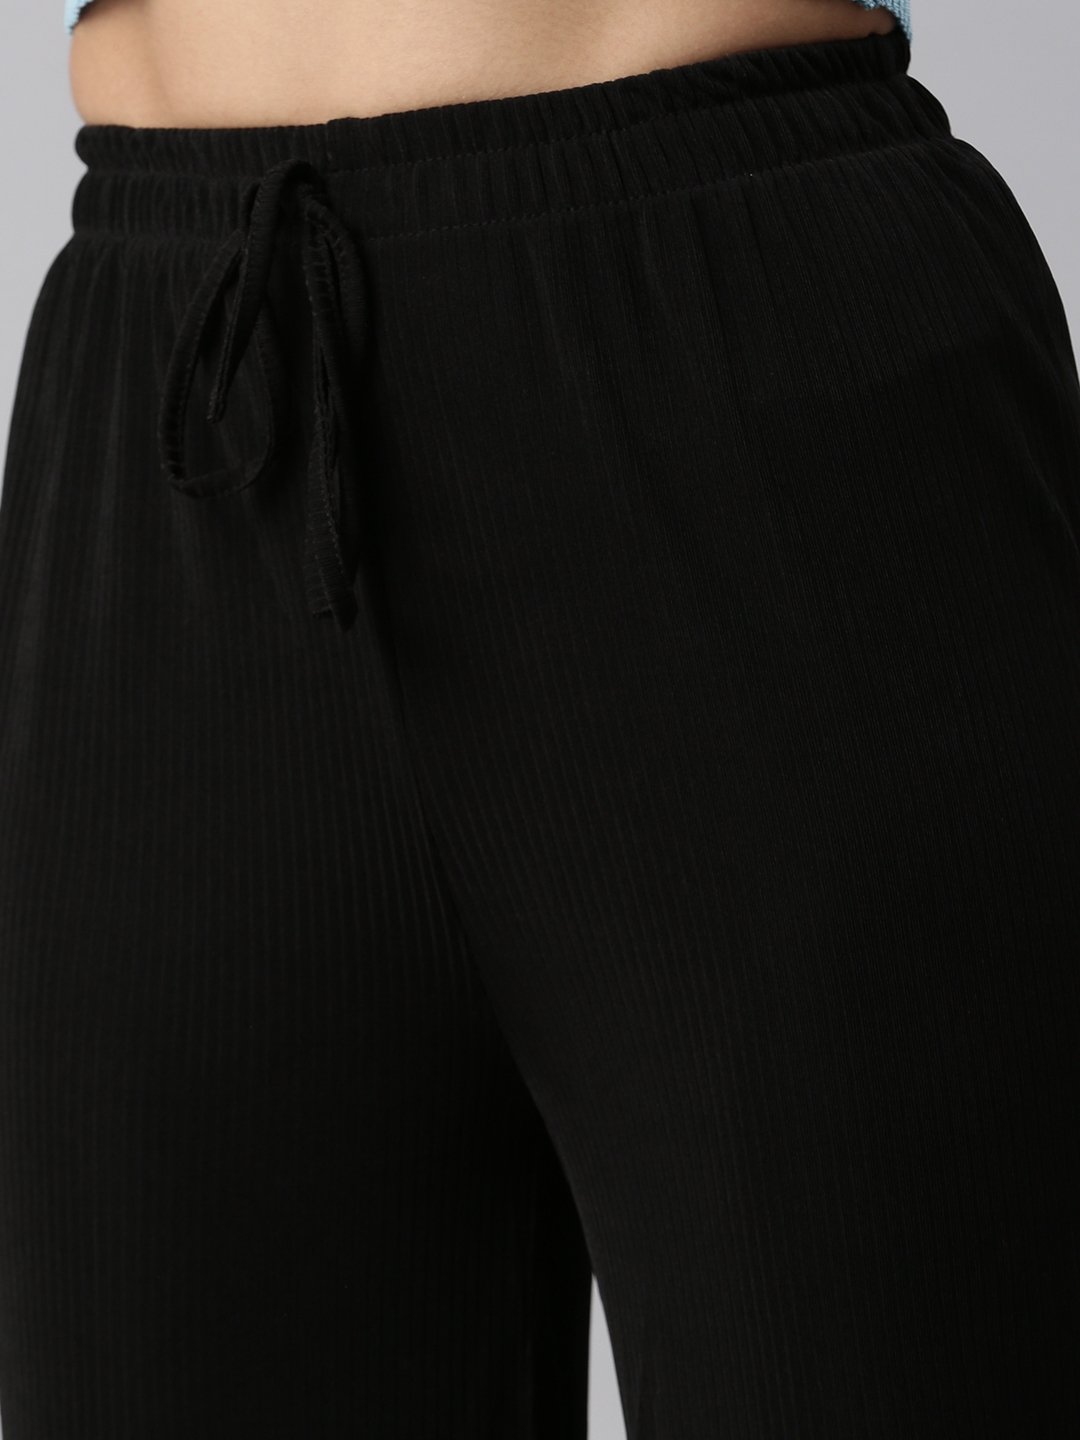 Get Side Strip & Graphic Detail Blue Jogger Pants at ₹ 1039 | LBB Shop